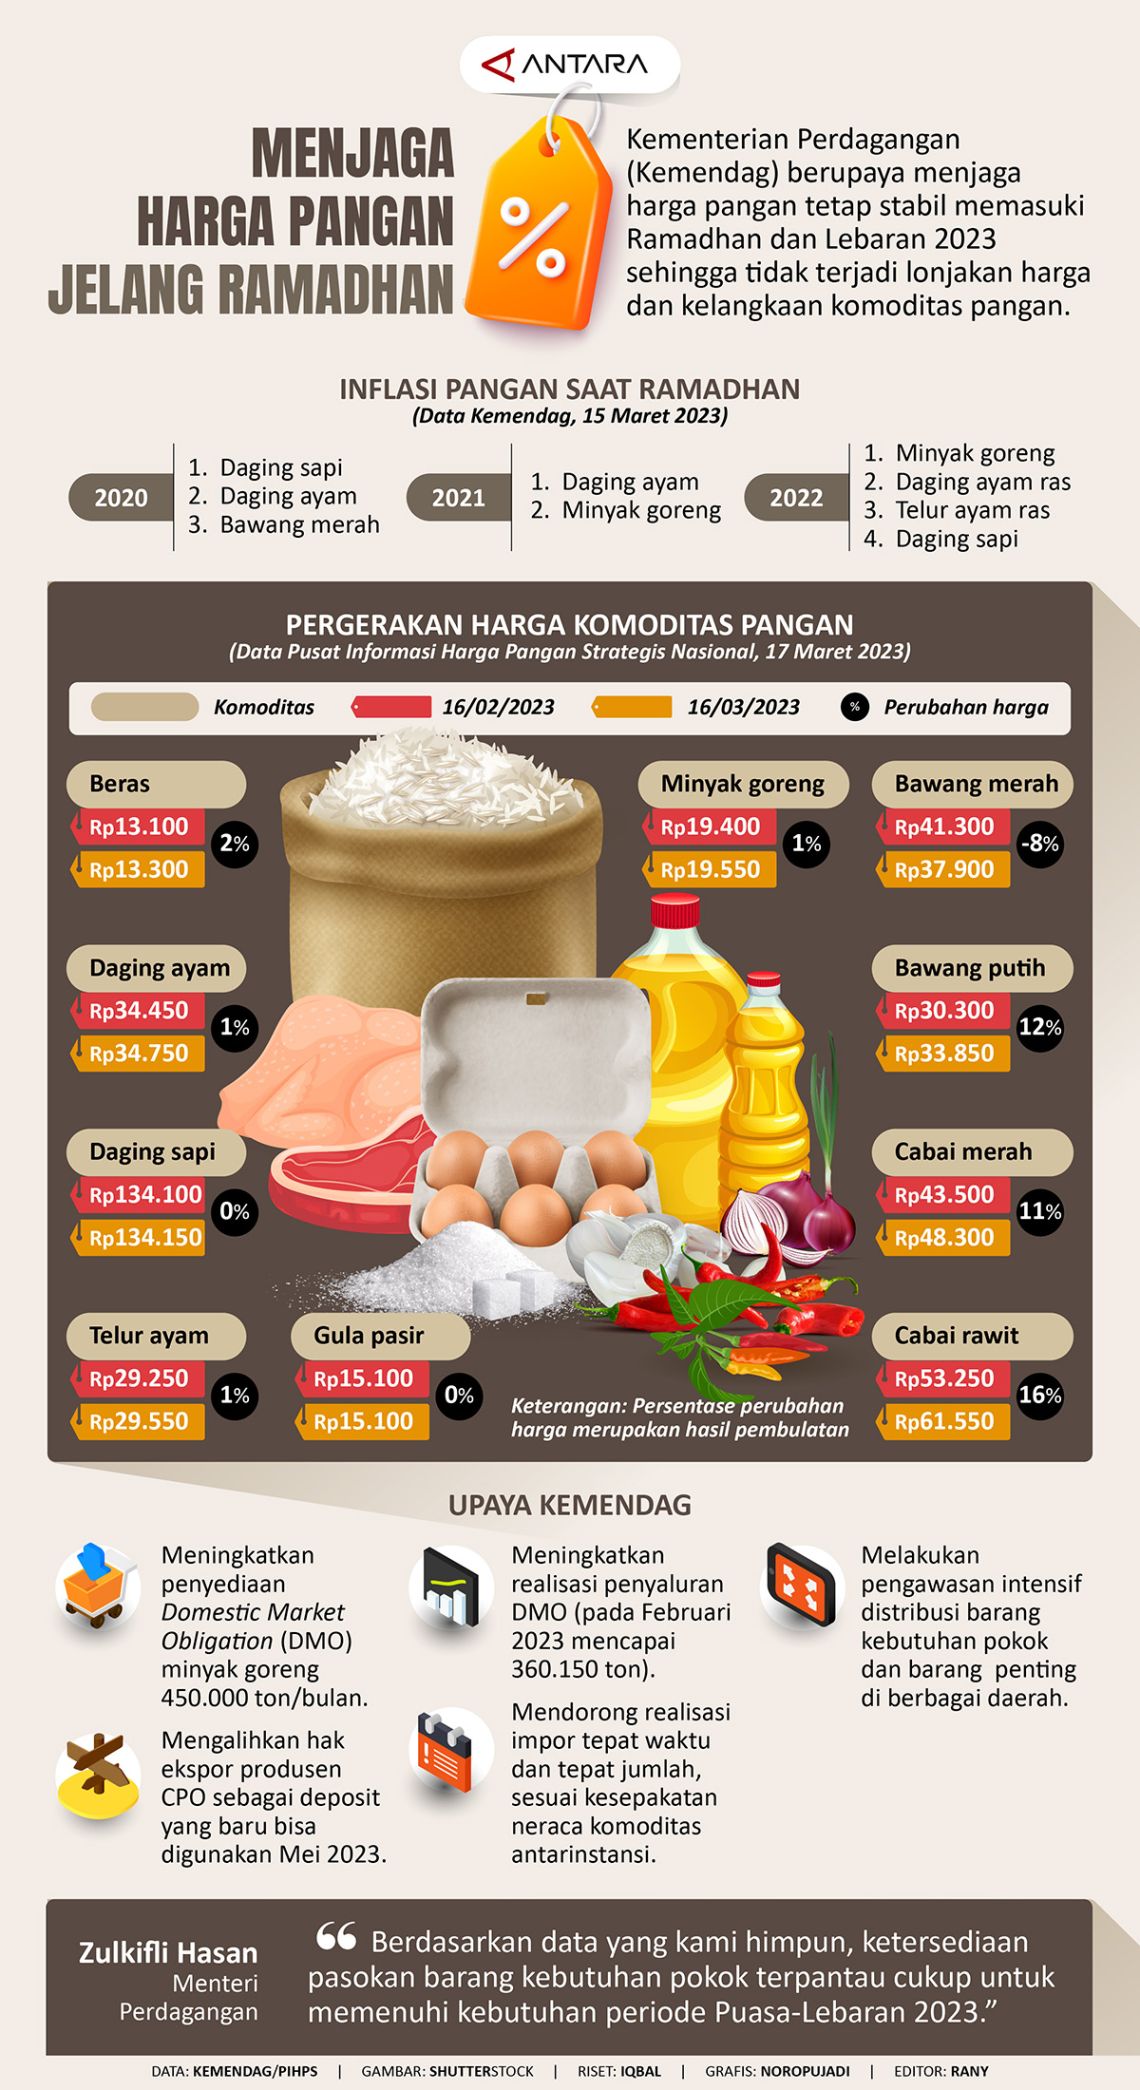 Menjaga harga pangan jelang Ramadhan